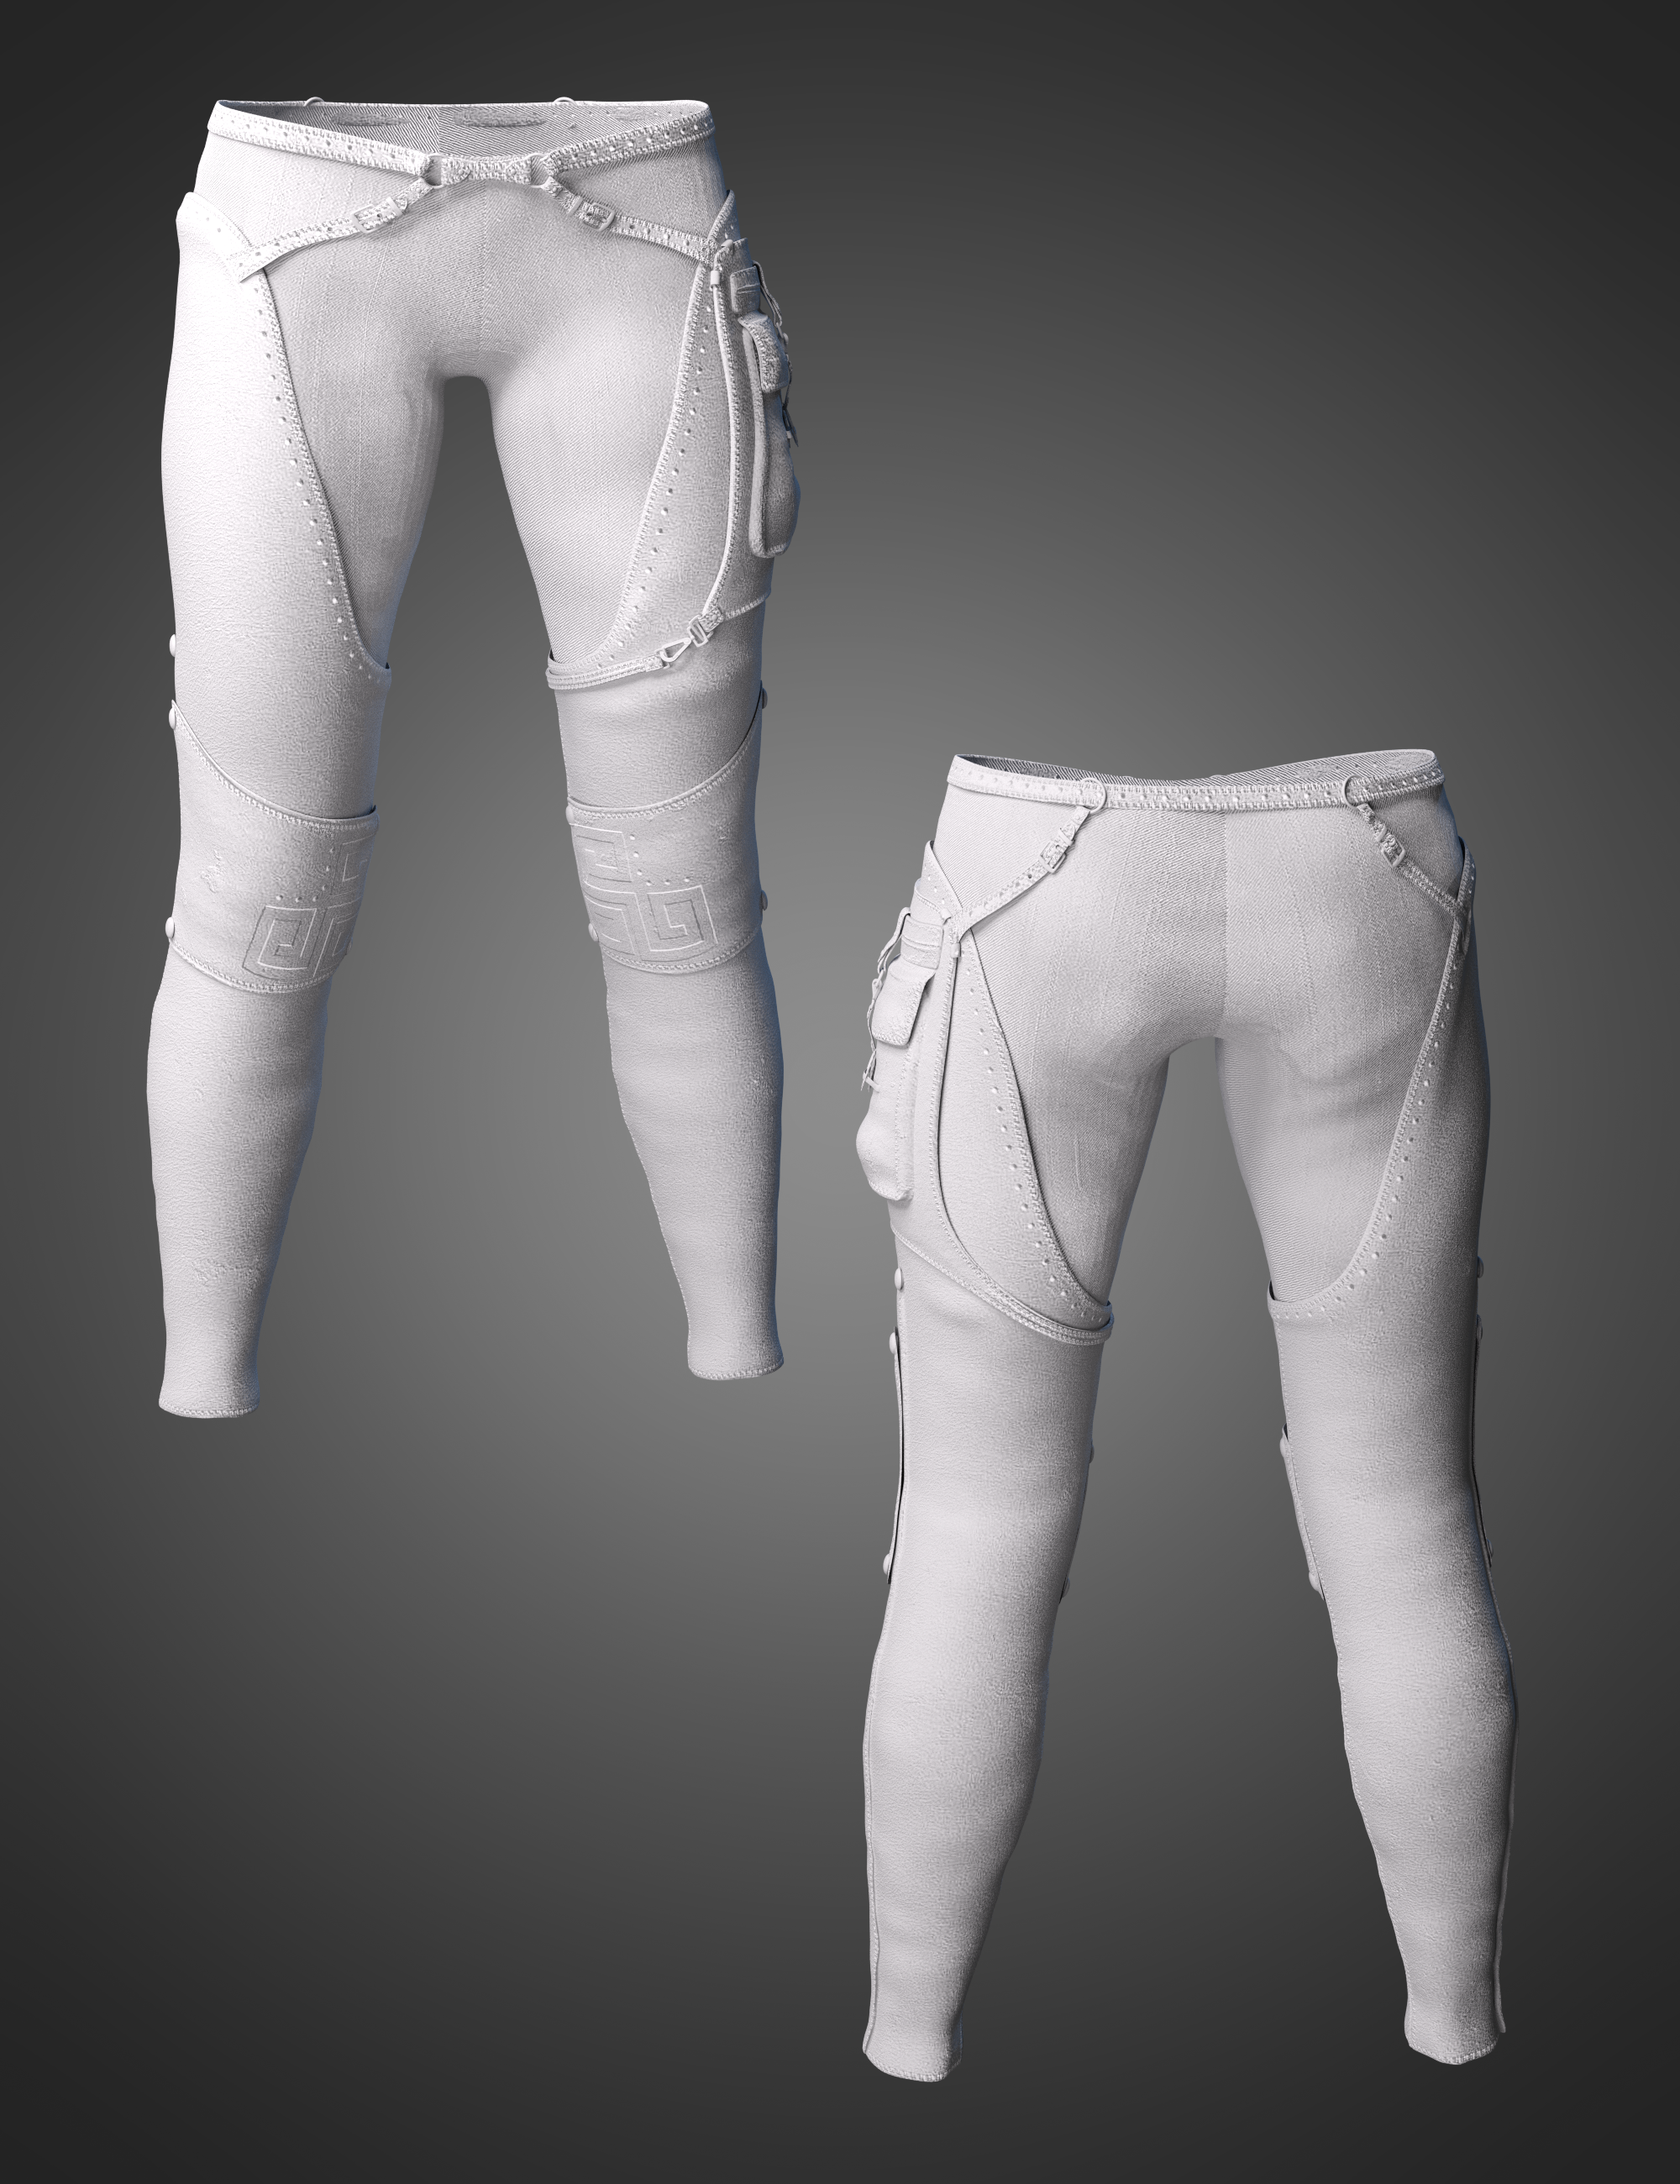 Halcyon Fragment Pants for Genesis 8 and 8.1 Females by: Barbara BrundonUmblefuglyShox-Design, 3D Models by Daz 3D